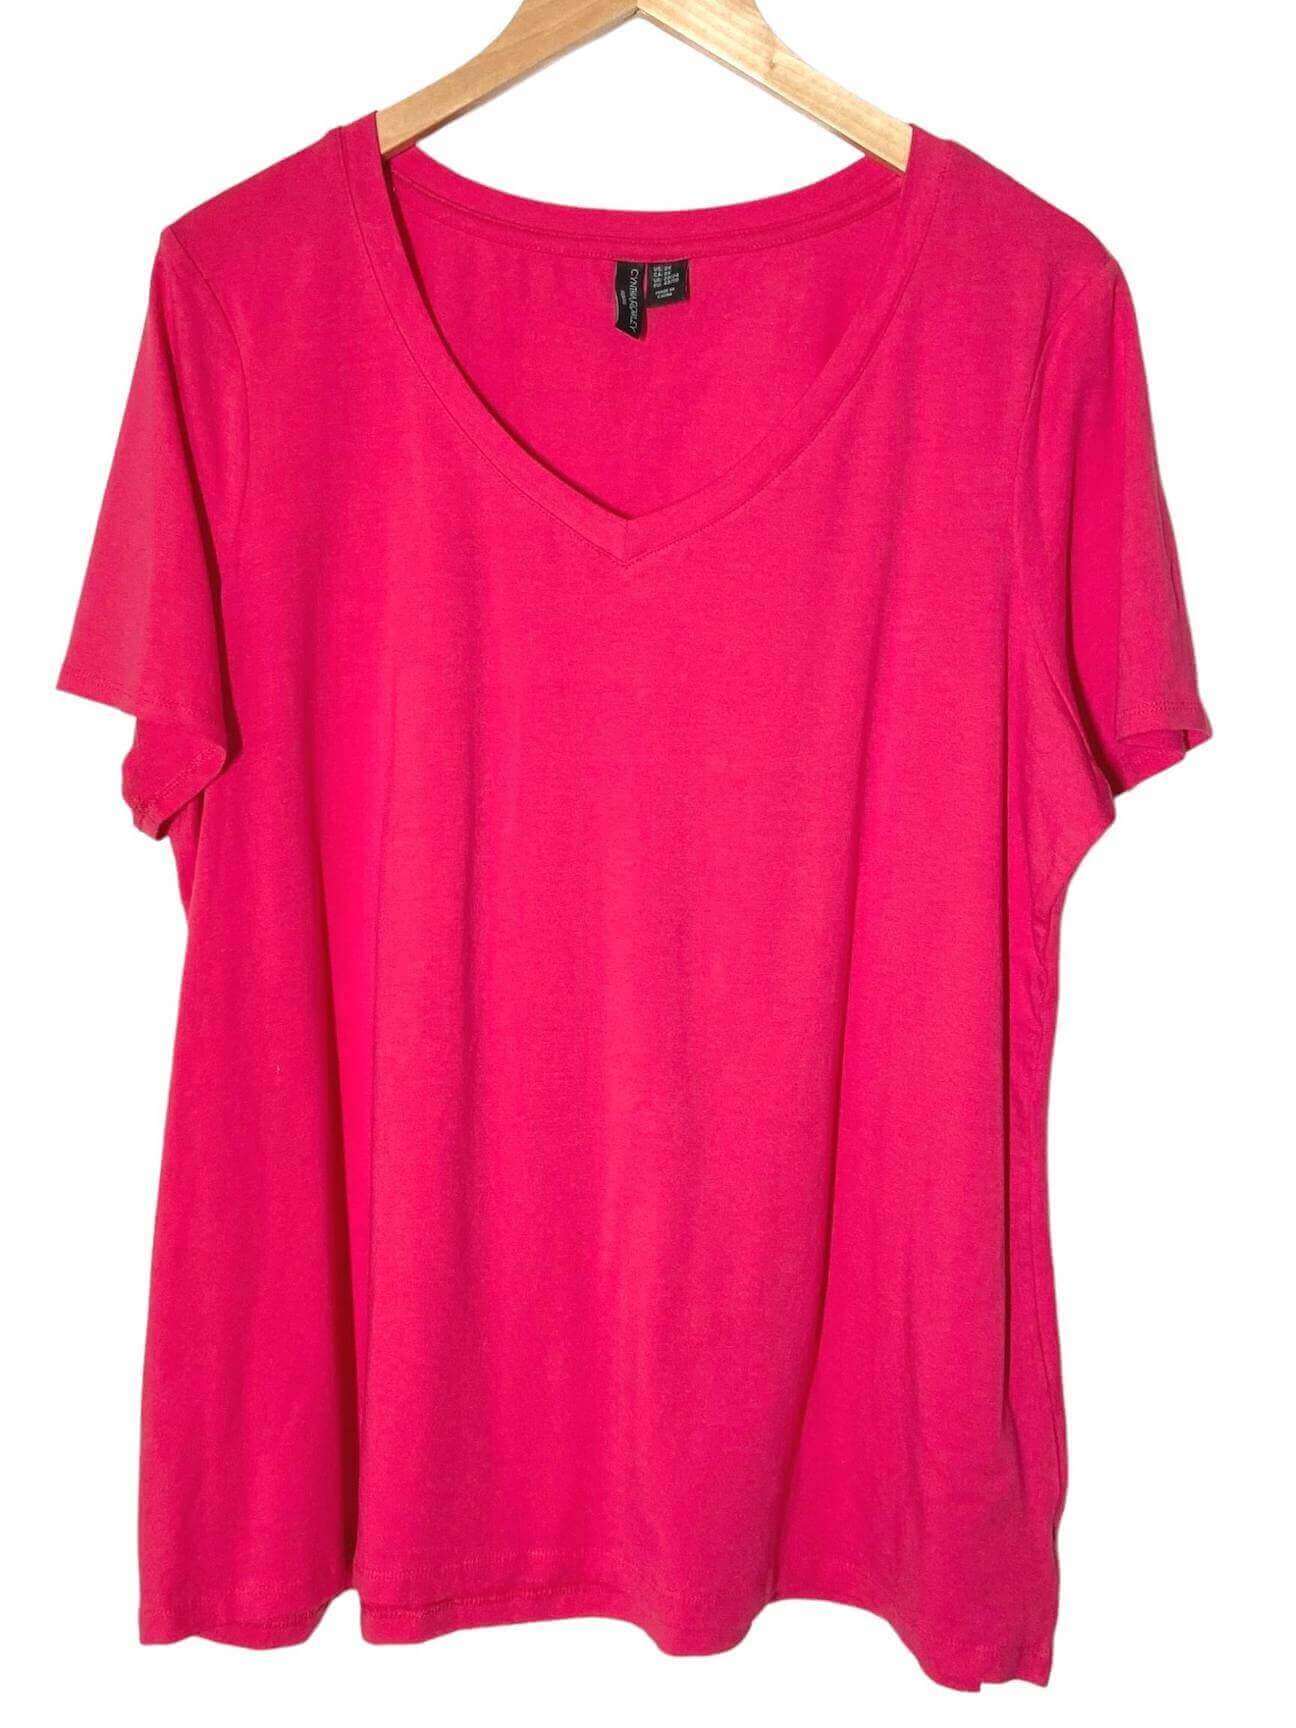 Bright Winter CYNTHIA ROWLEY Woman pink v-neck tee t-shirt